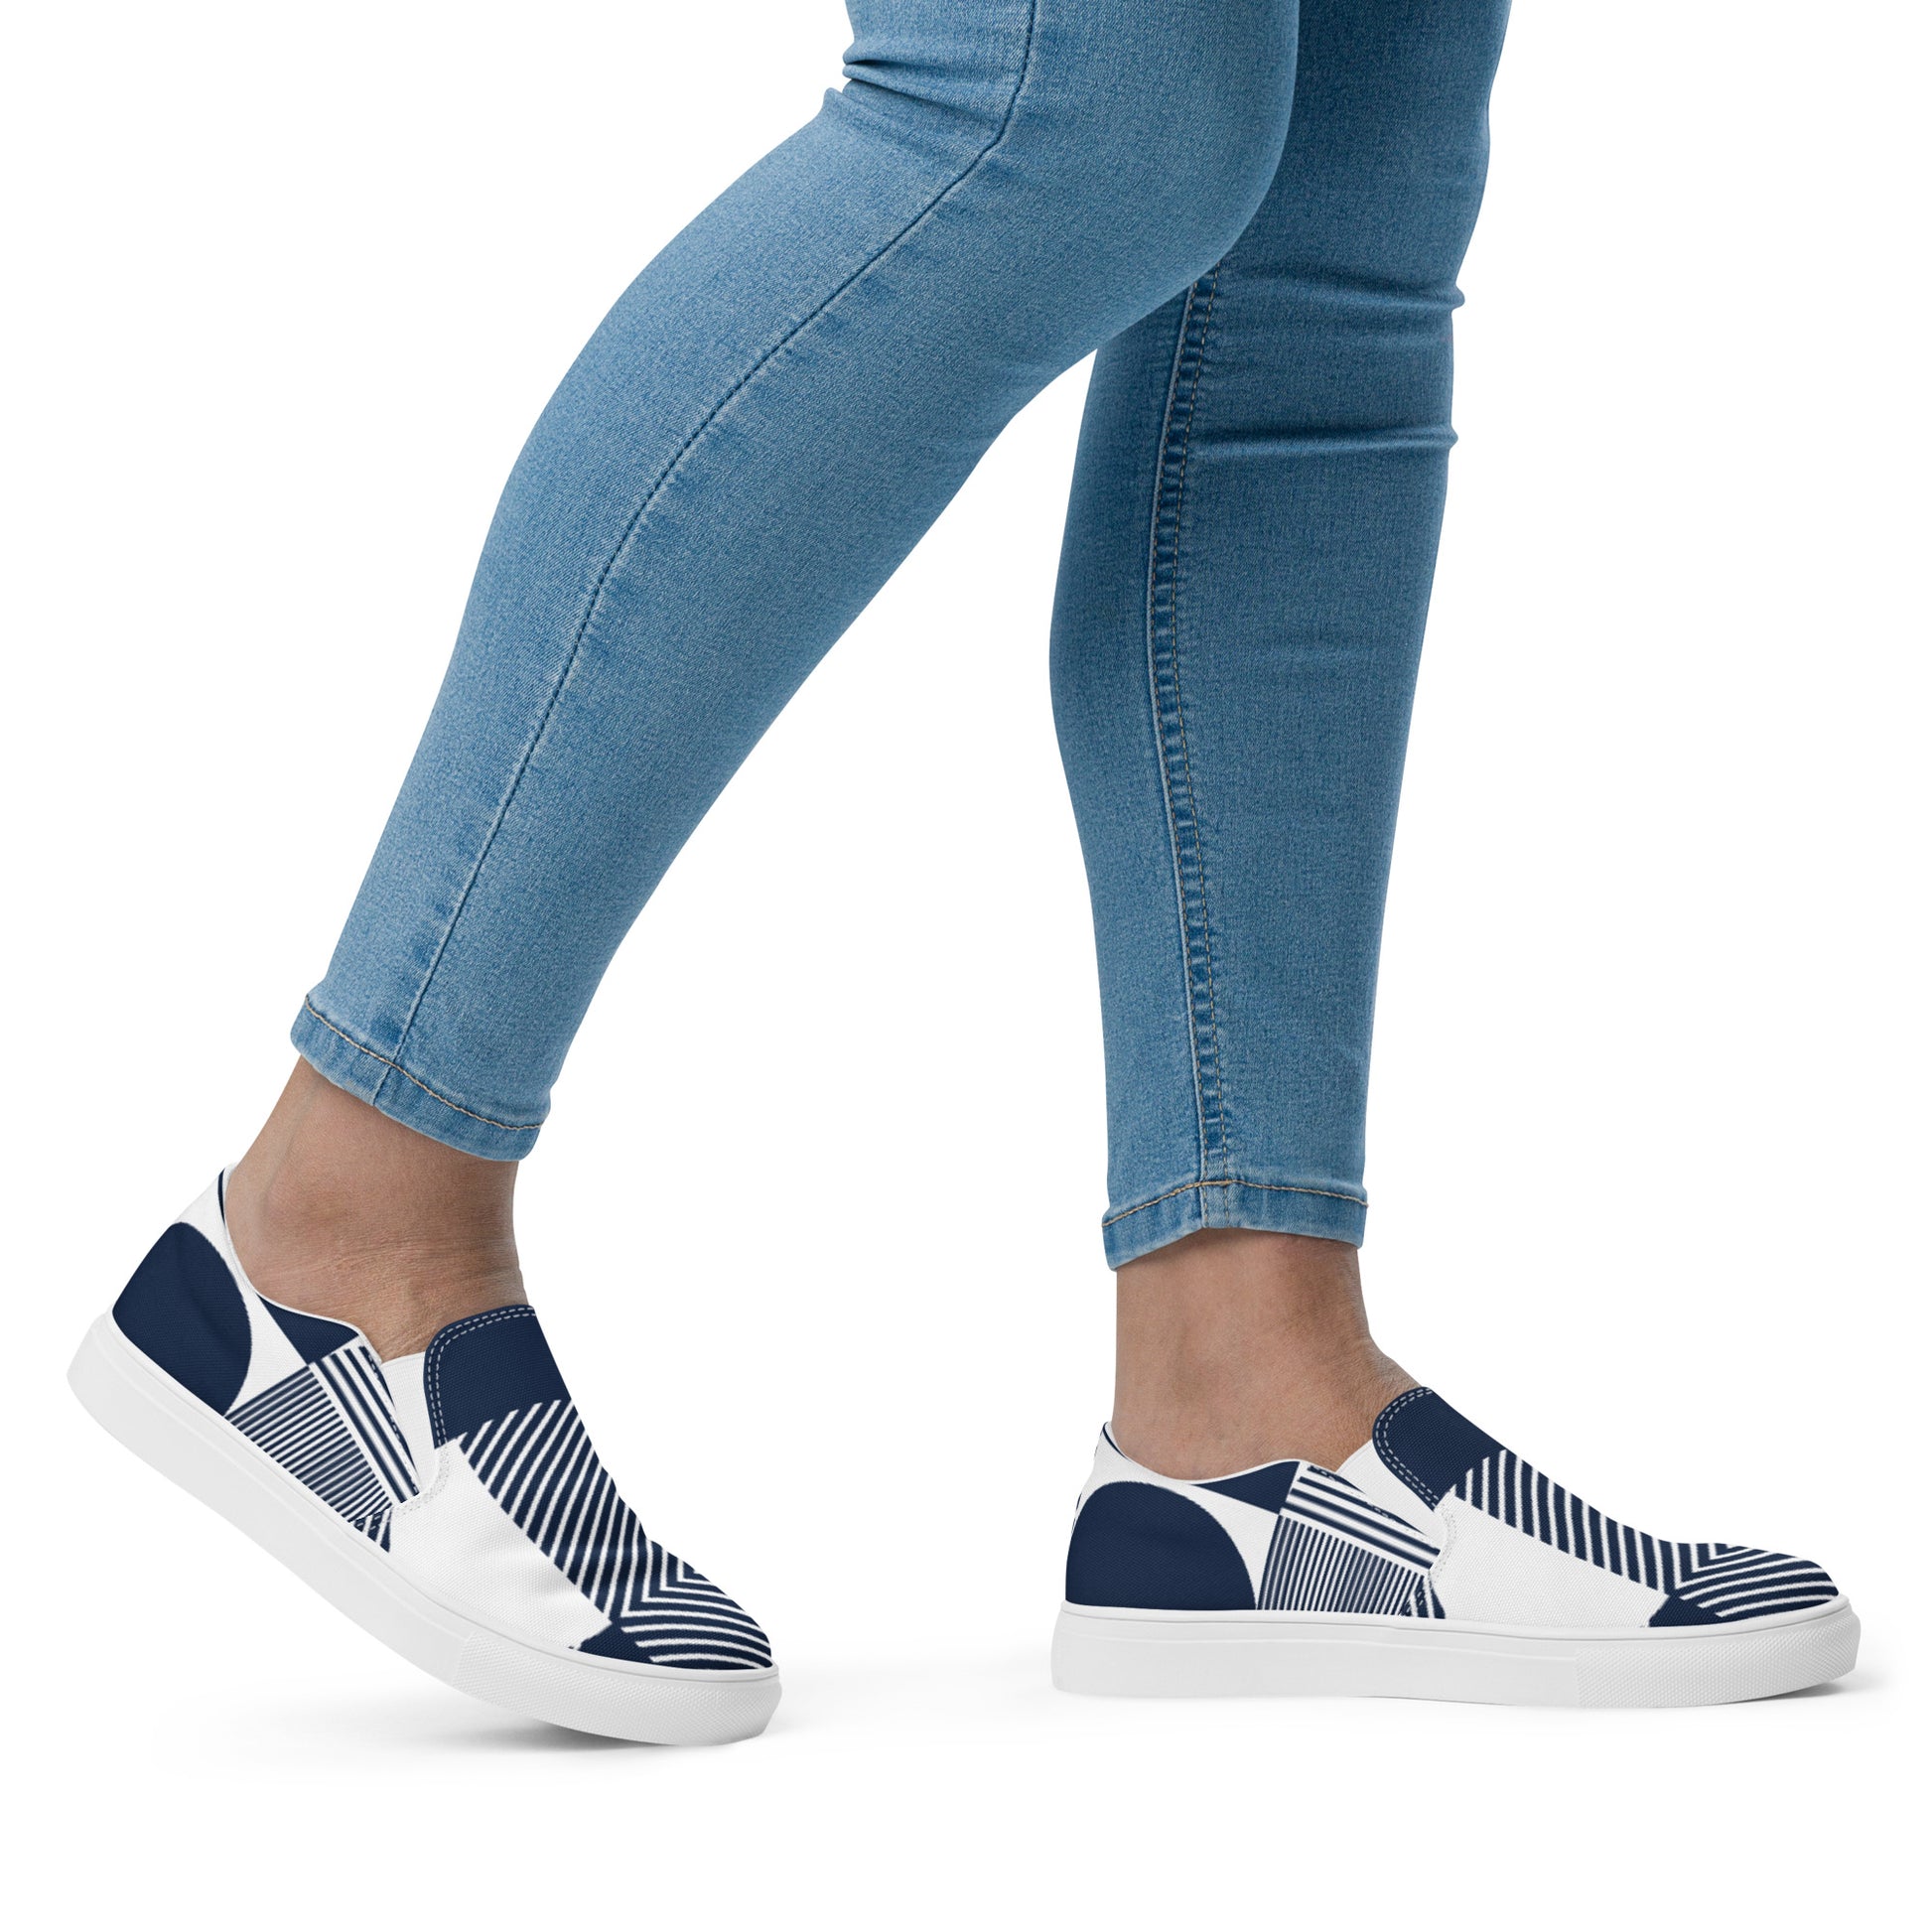 Blue Geometric - Women’s slip-on canvas shoes Womens Slip On Shoes